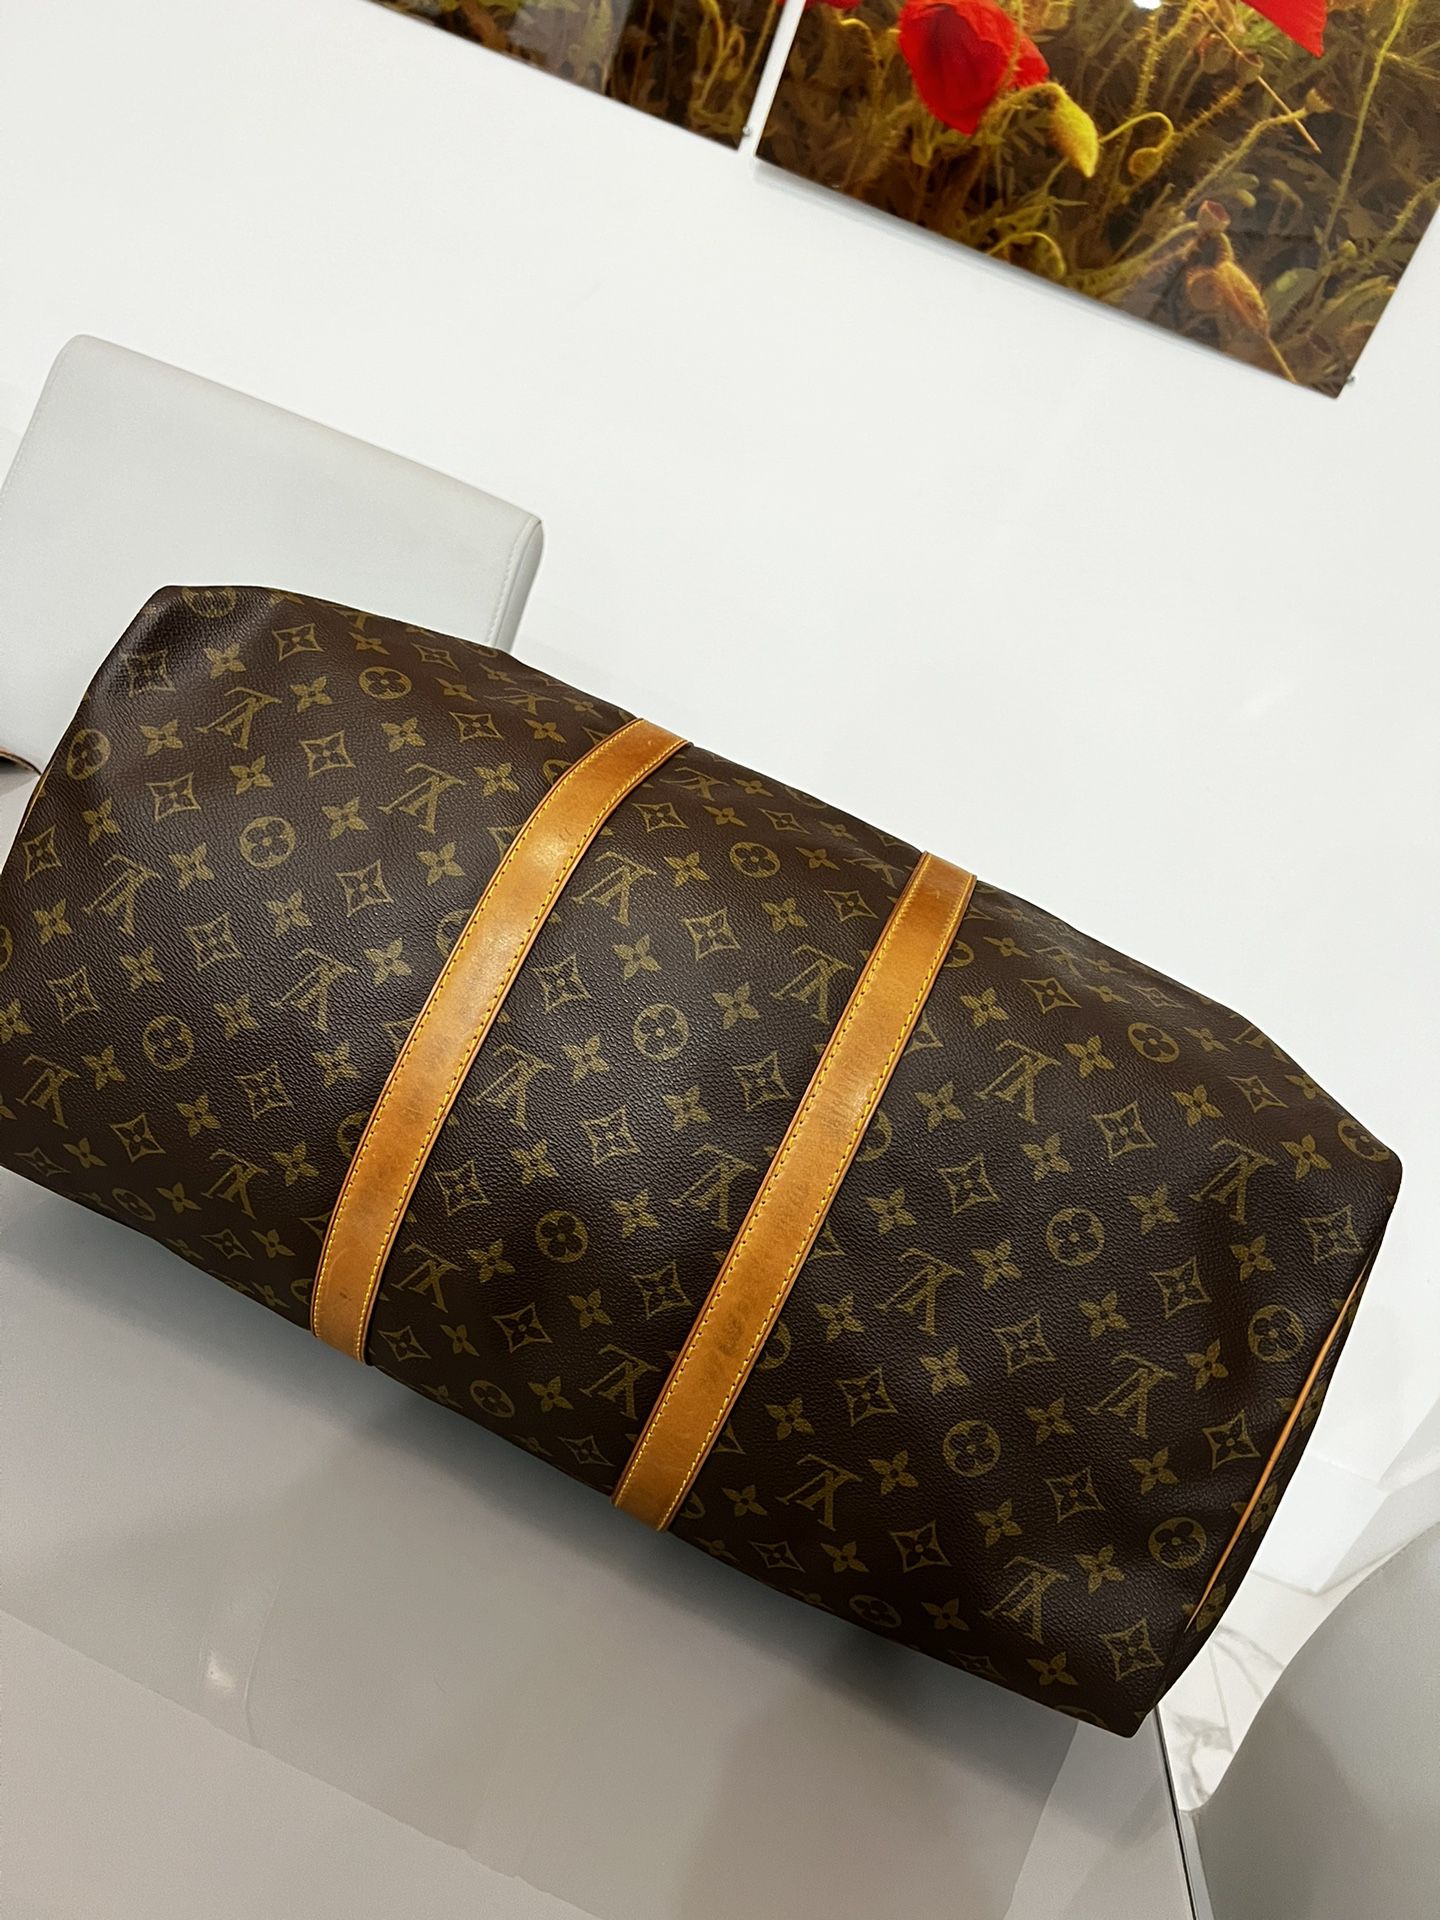 Authentic Louis Vuitton Thames PM handbag shoulder bag discontinued style  for Sale in Pompano Beach, FL - OfferUp